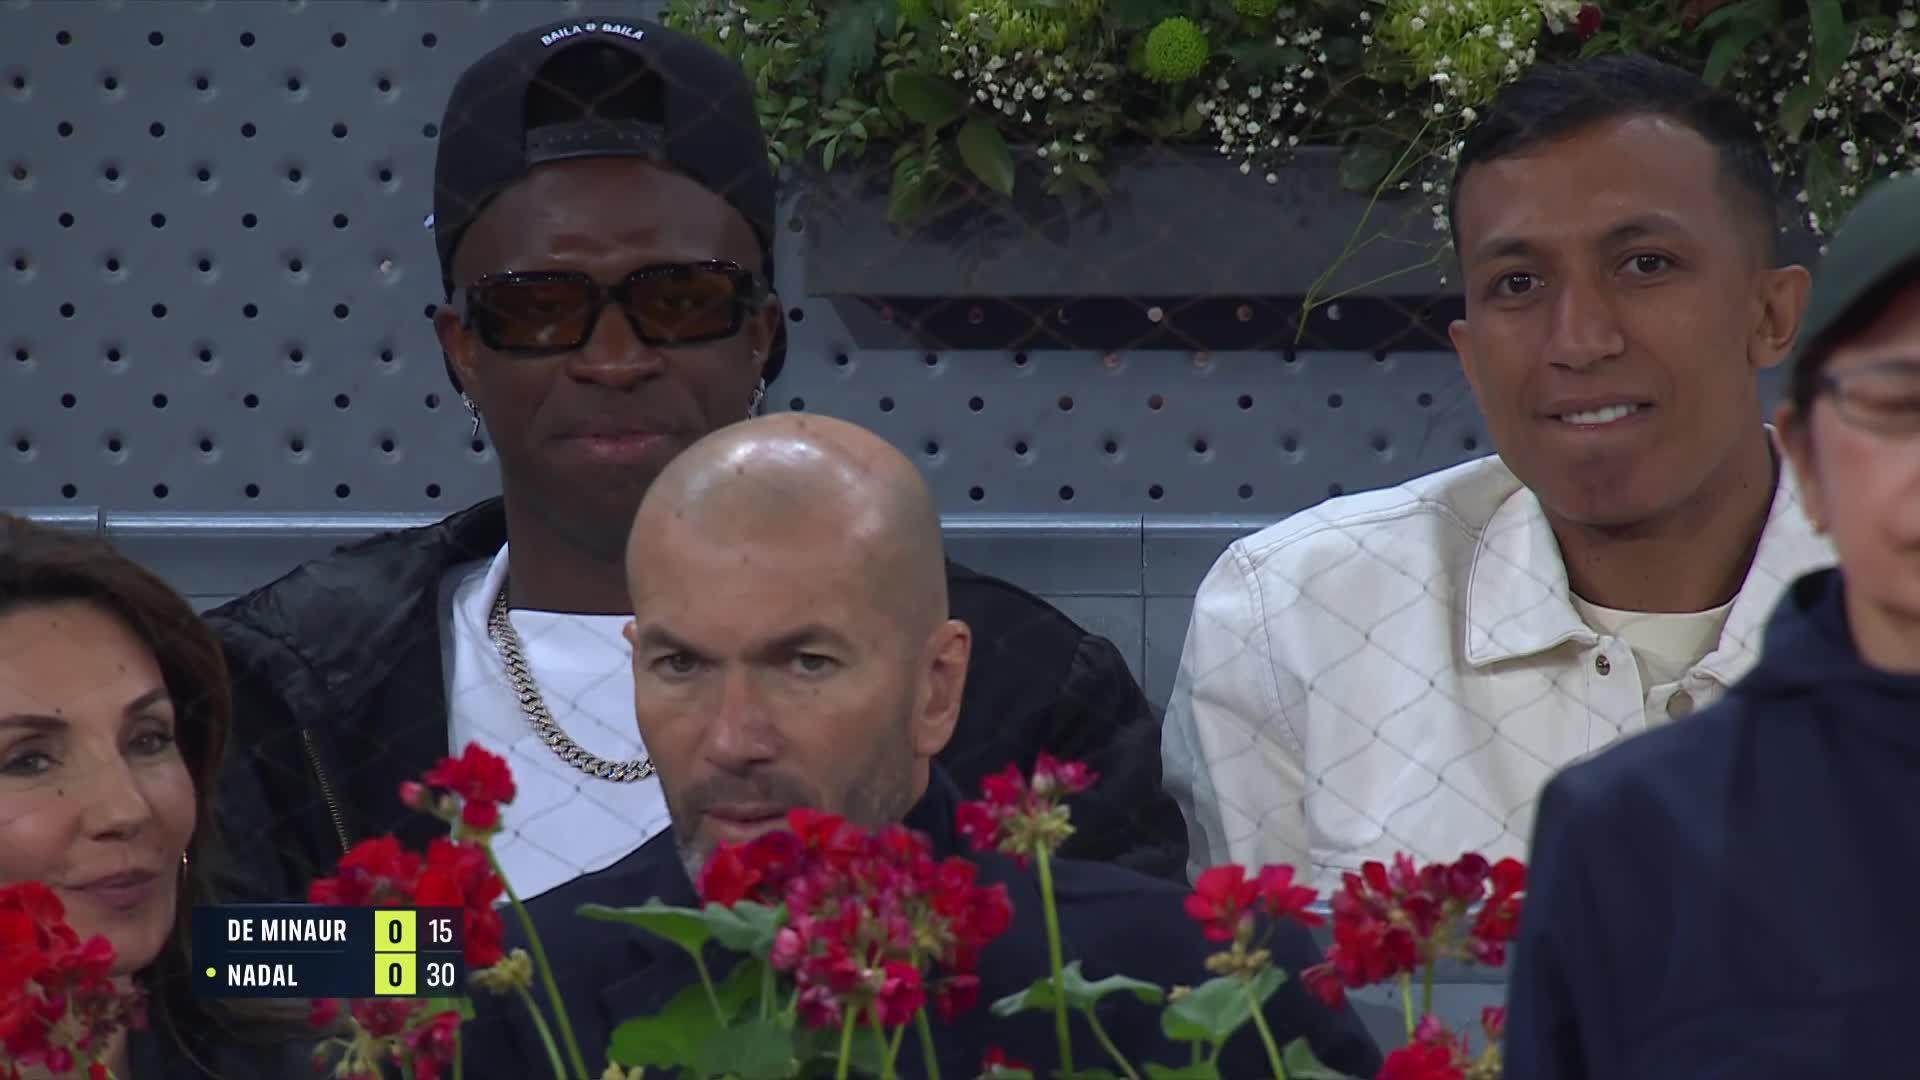 Football stars Zidane, Vinicius Jr. in the house for Nadal vs. De Minaur in Madrid